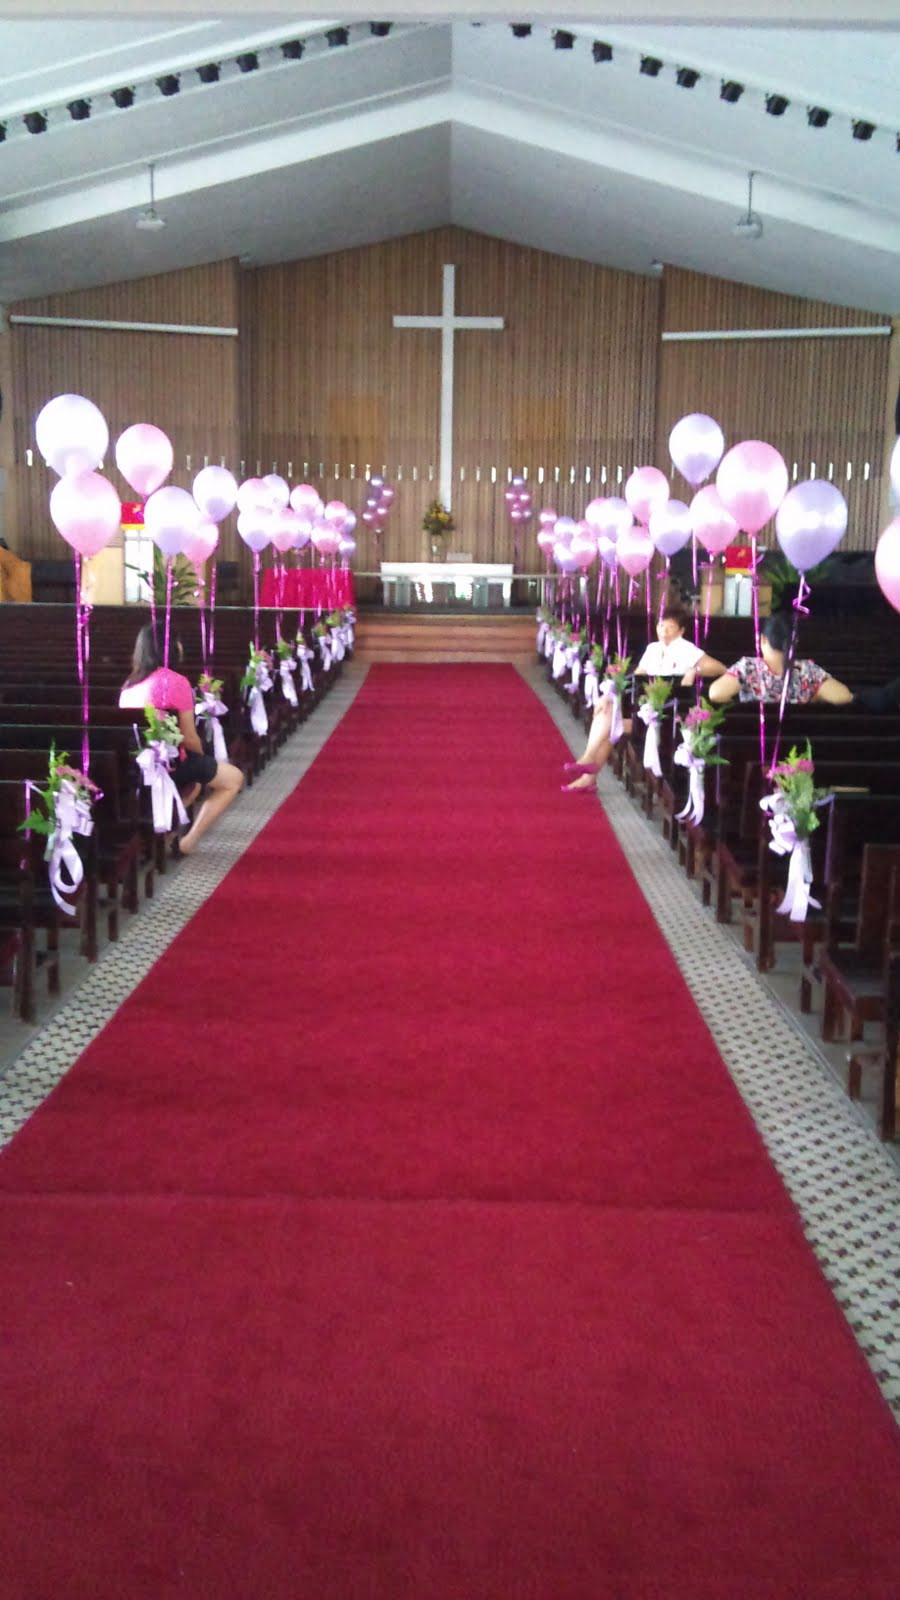 Church Decorations For Weddings
 Balloon decorations for weddings birthday parties